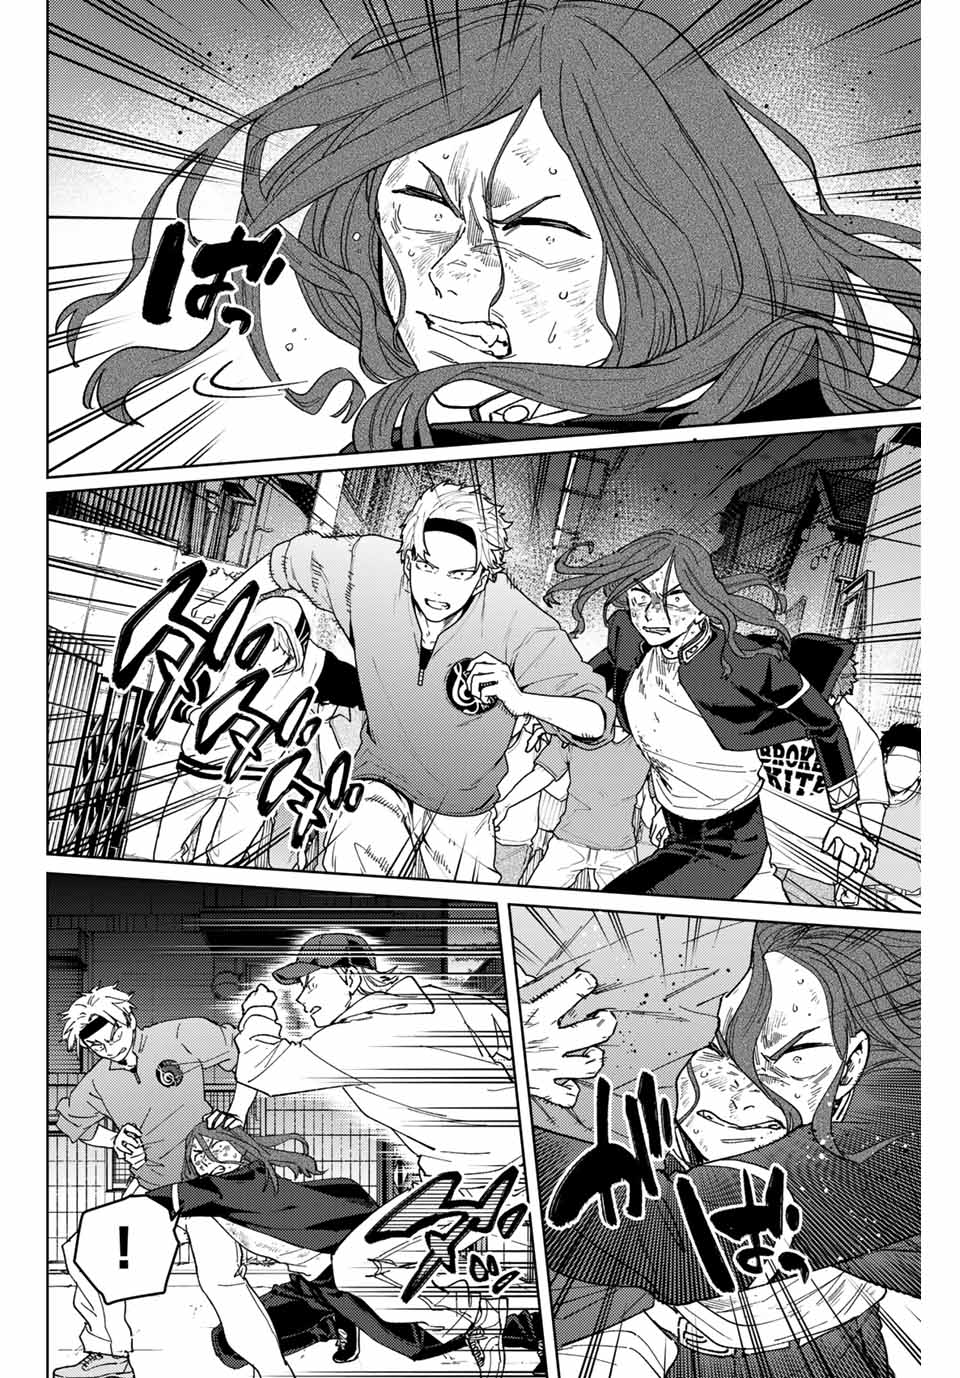 Wind Breaker (NII Satoru) - Chapter 139 - Page 2